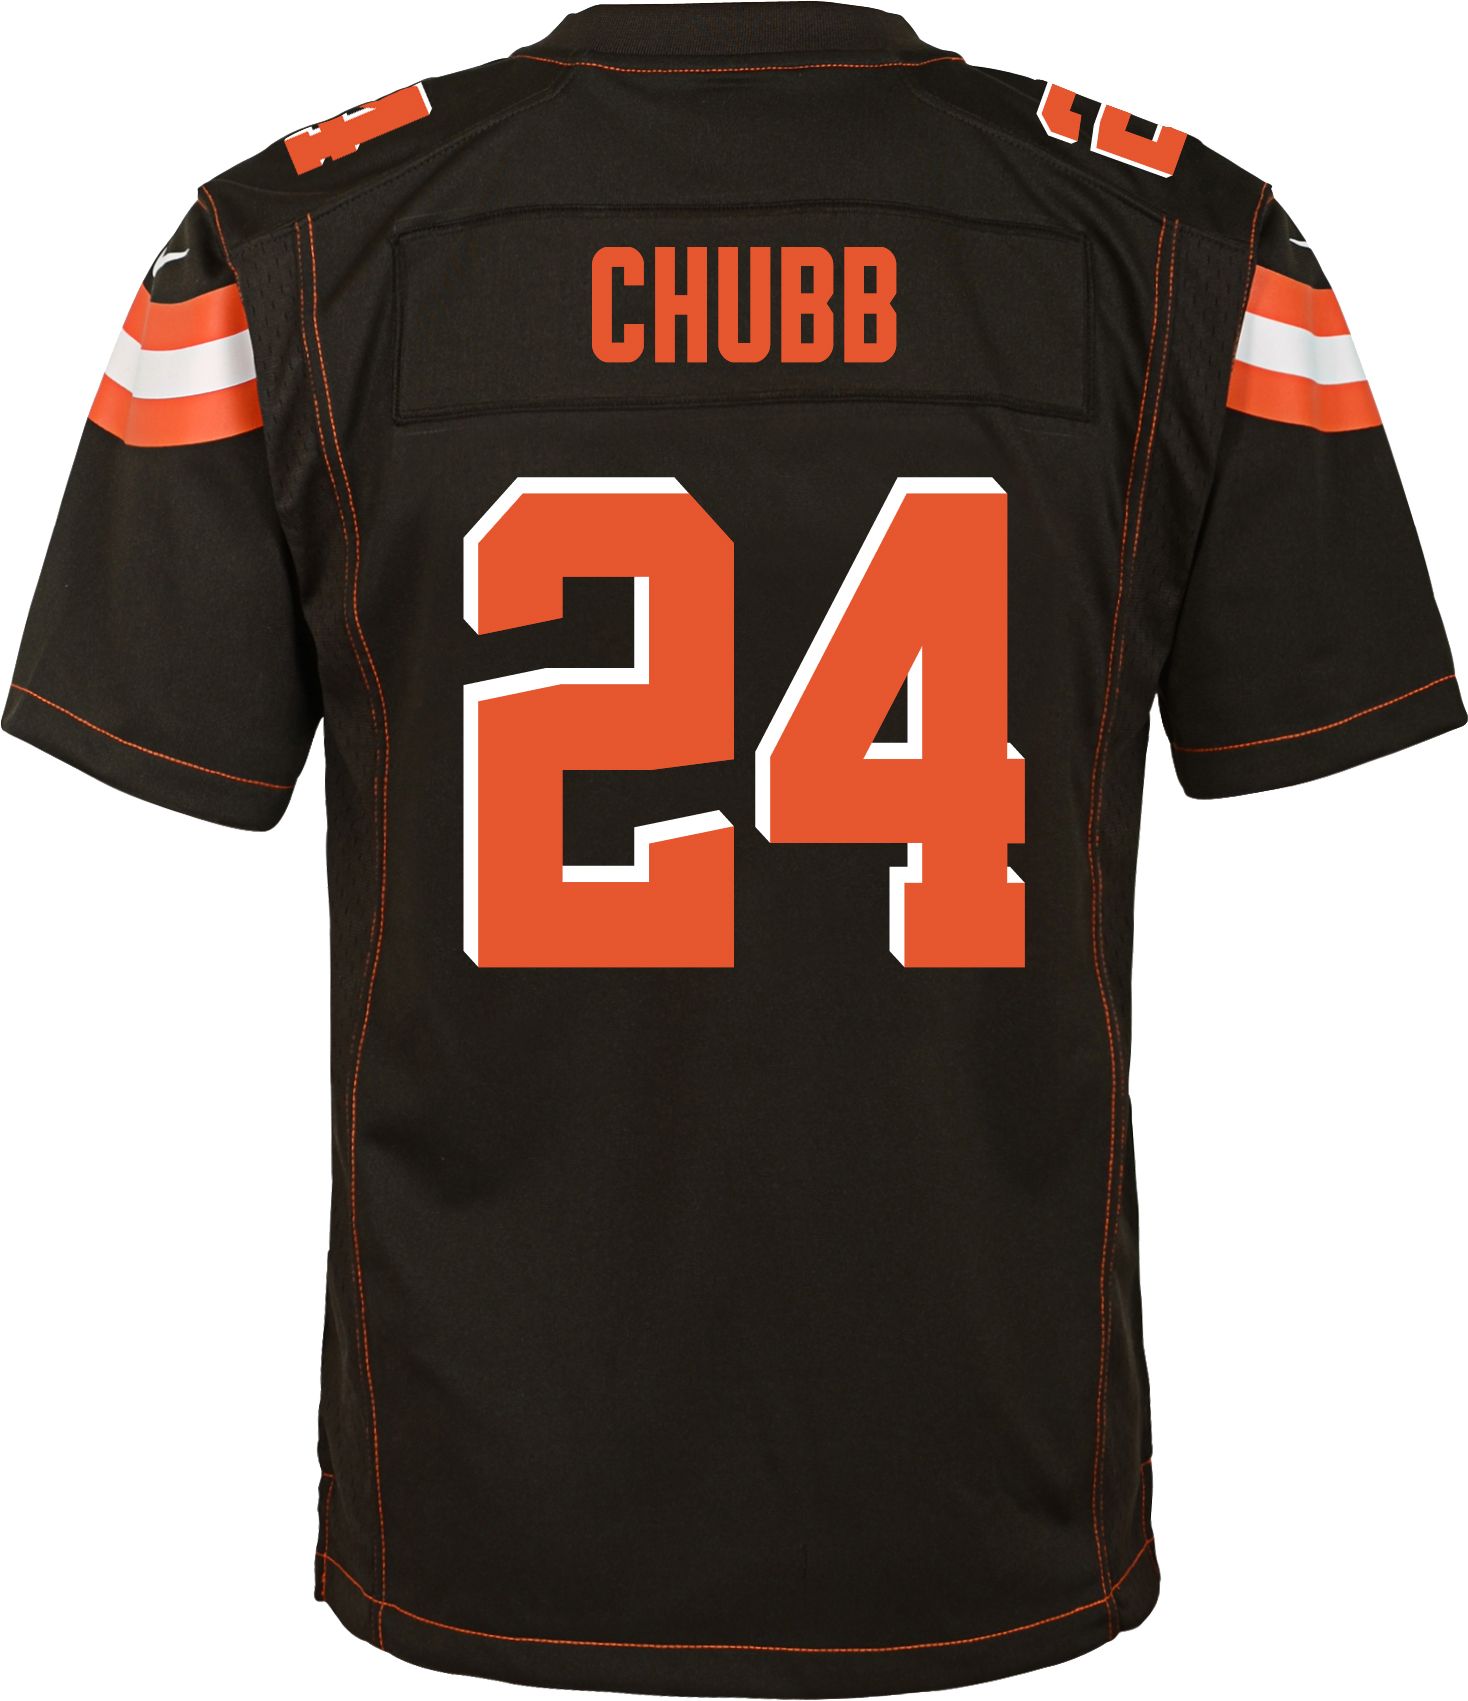 Cleveland Browns Nick Chubb #24 